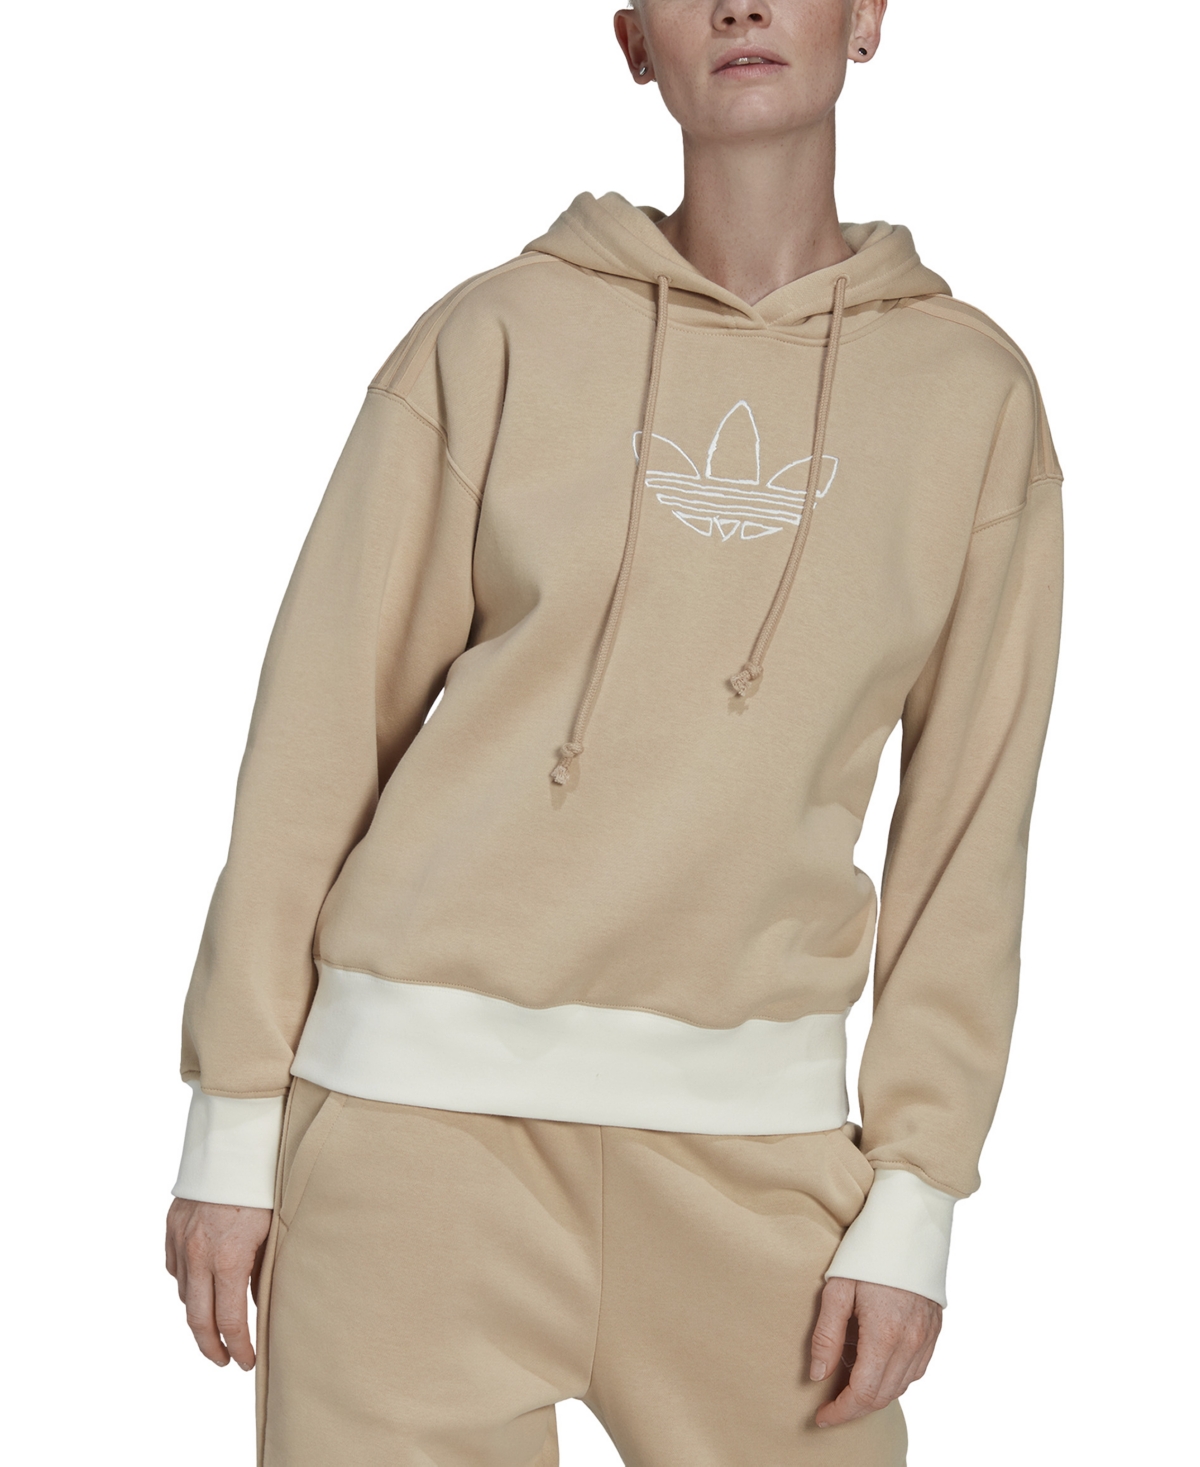 adidas Originals Women's Trefoil Graphic Embroidery Sweatshirt Hoodie